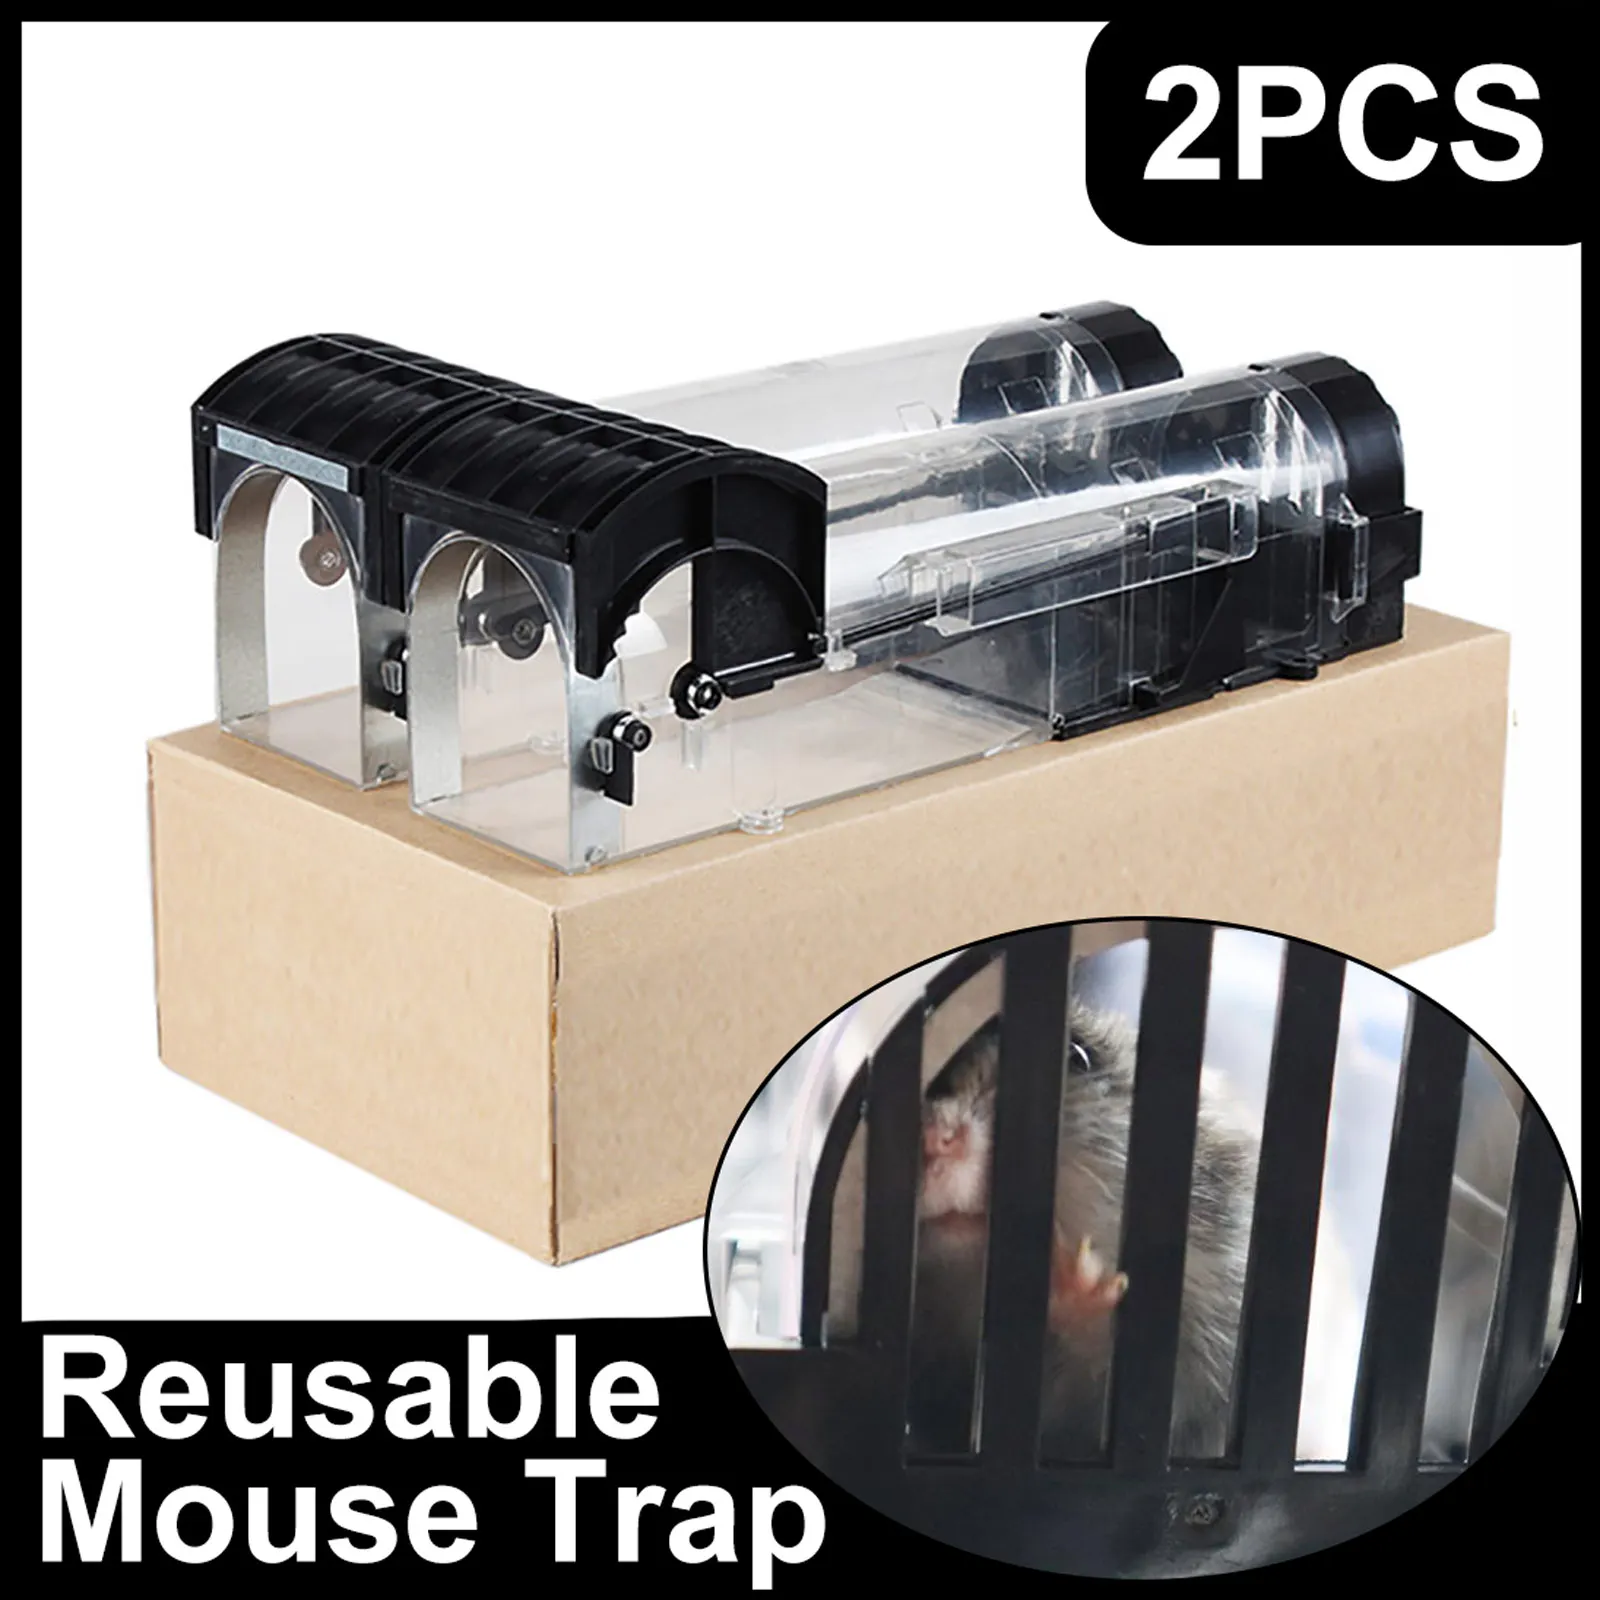 

Effective Mouse Trap Smart Reusable Plastic Live Humane Rat Mice Catcher Cage For Home Garden Restaurant Pest Control Reject